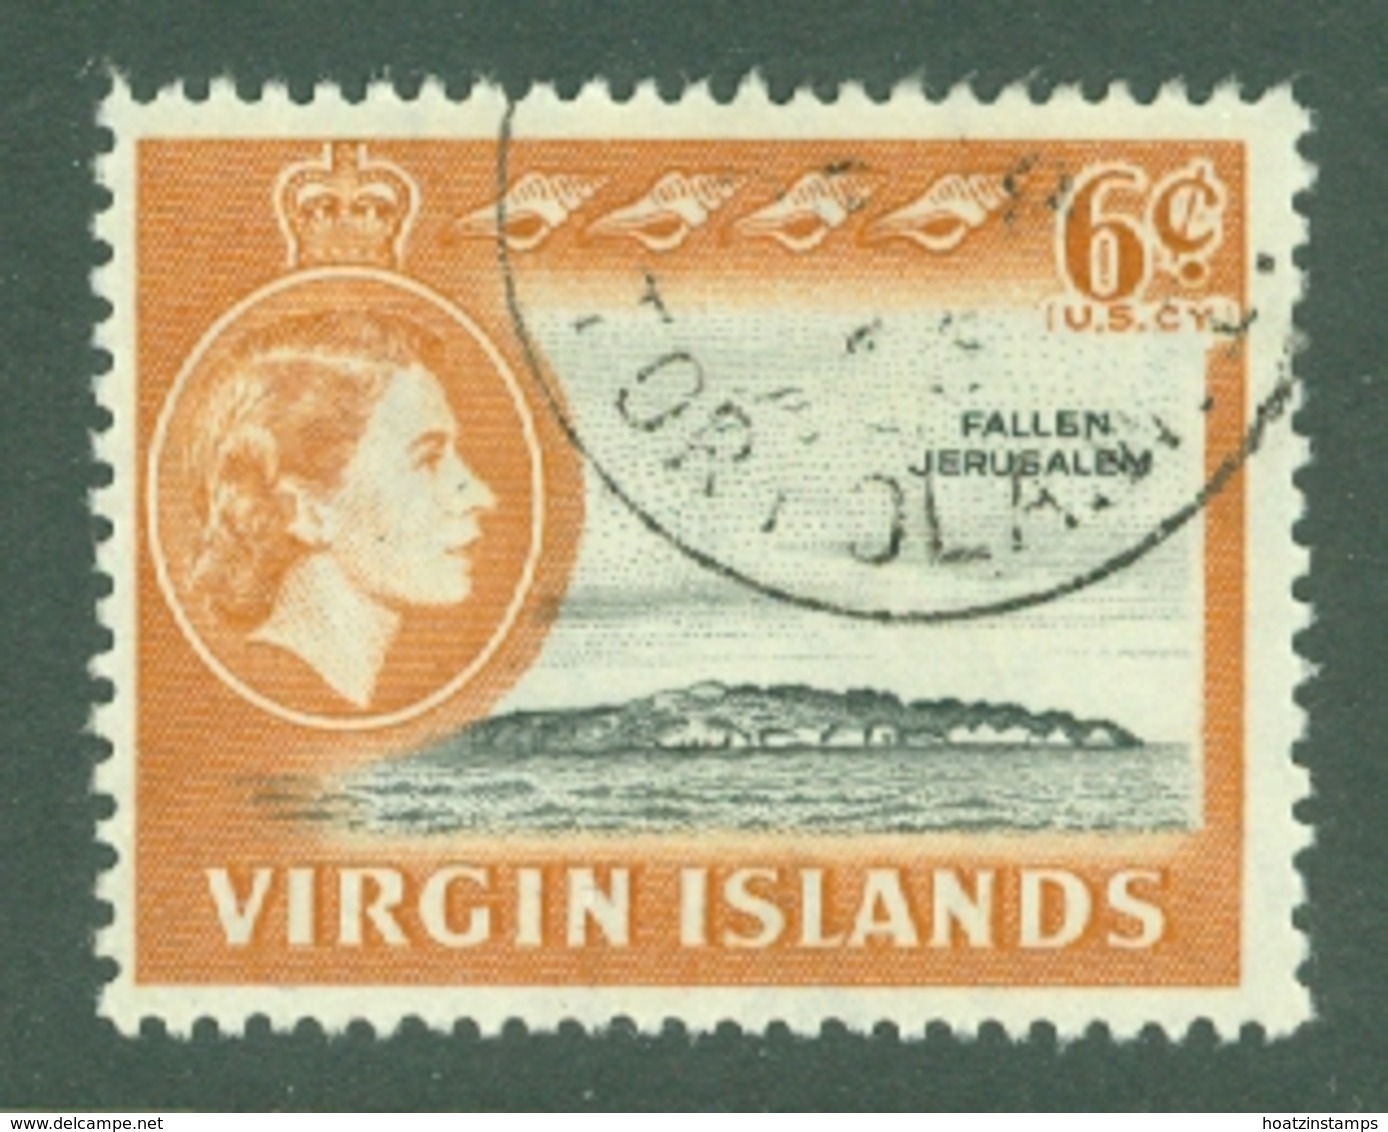 British Virgin Is: 1964/68   QE II - Pictorial   SG183   6c   Used - British Virgin Islands